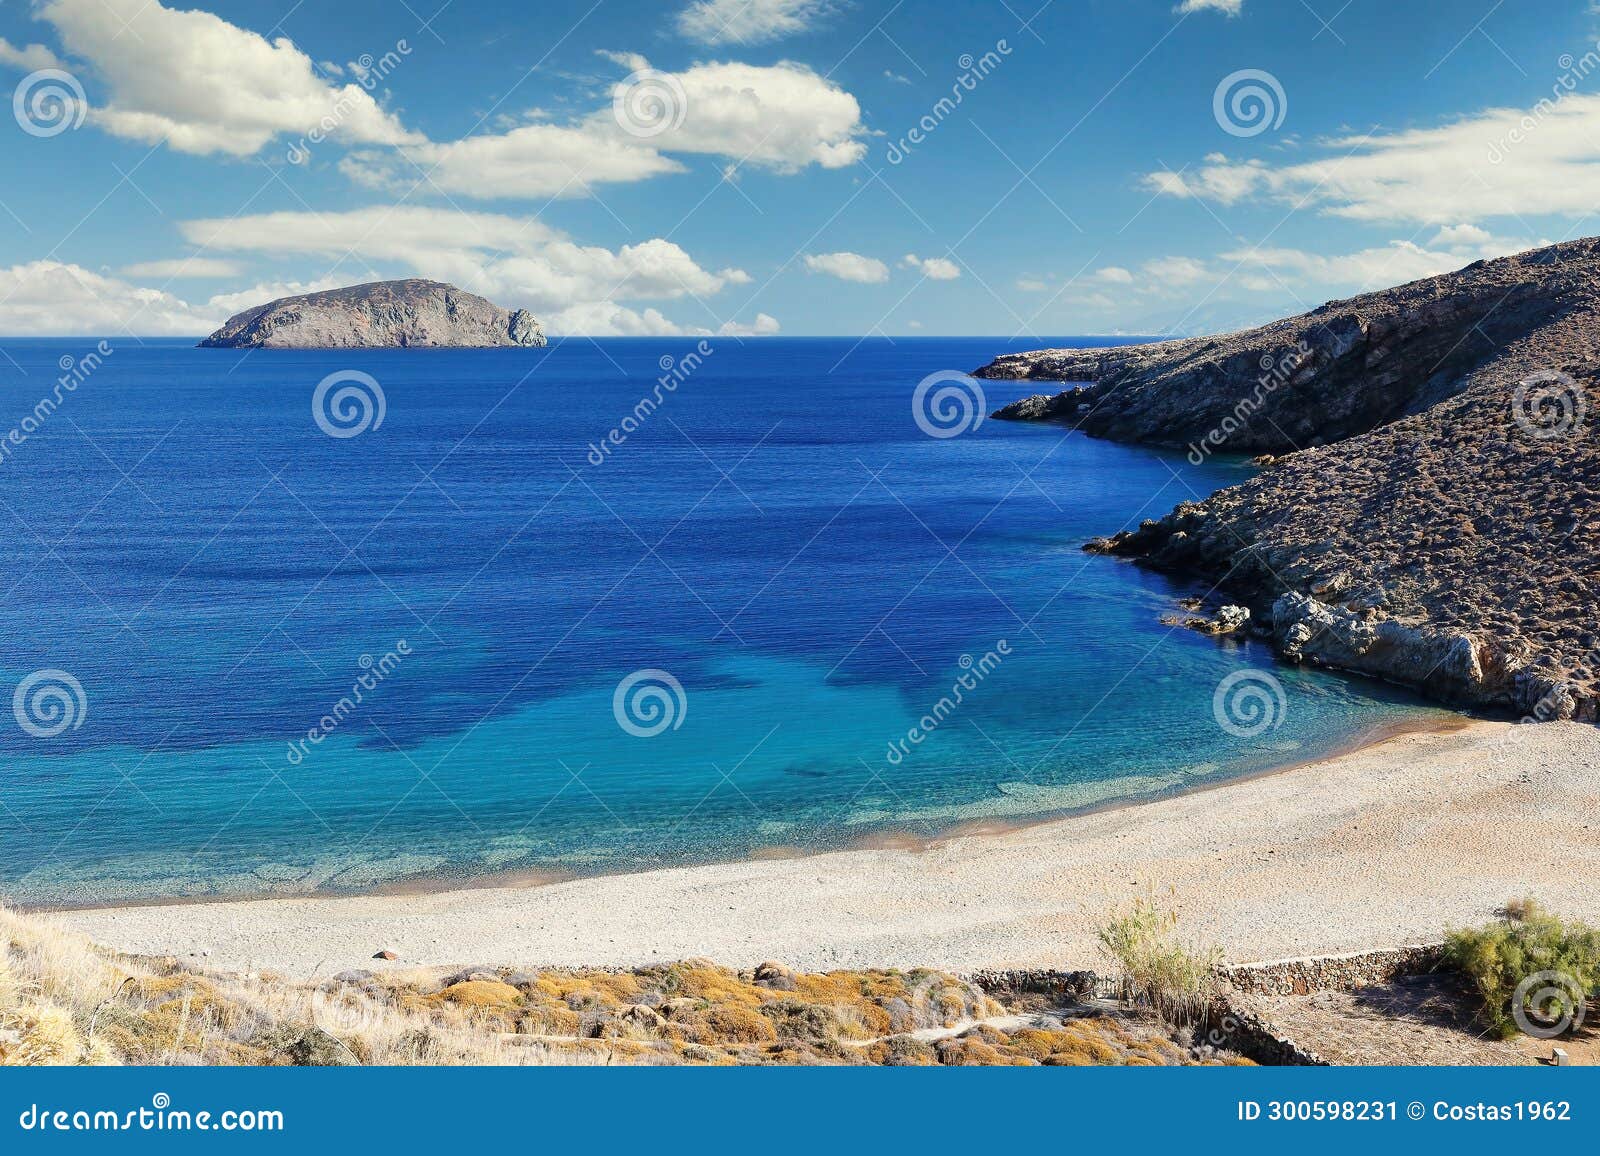 the beach lia of serifos island, greece